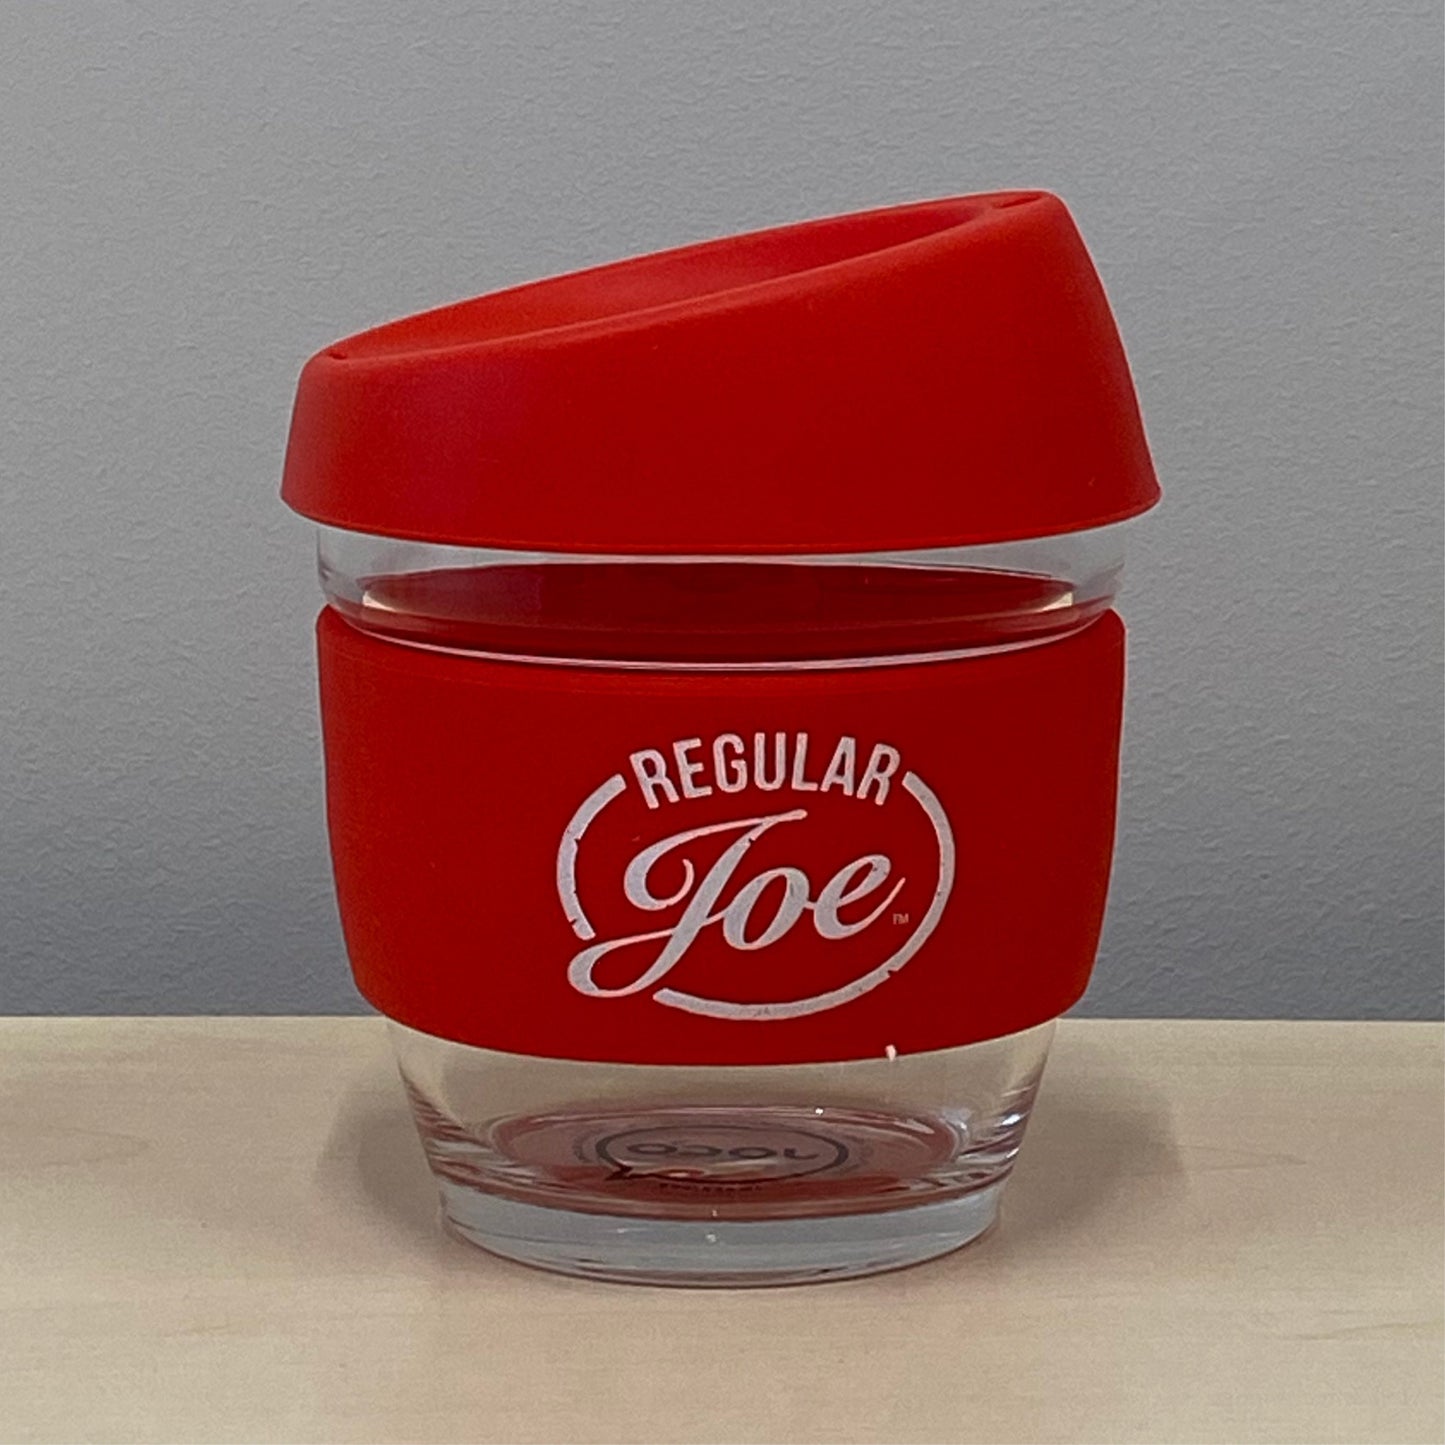 8oz Regular Joe Joco Cup